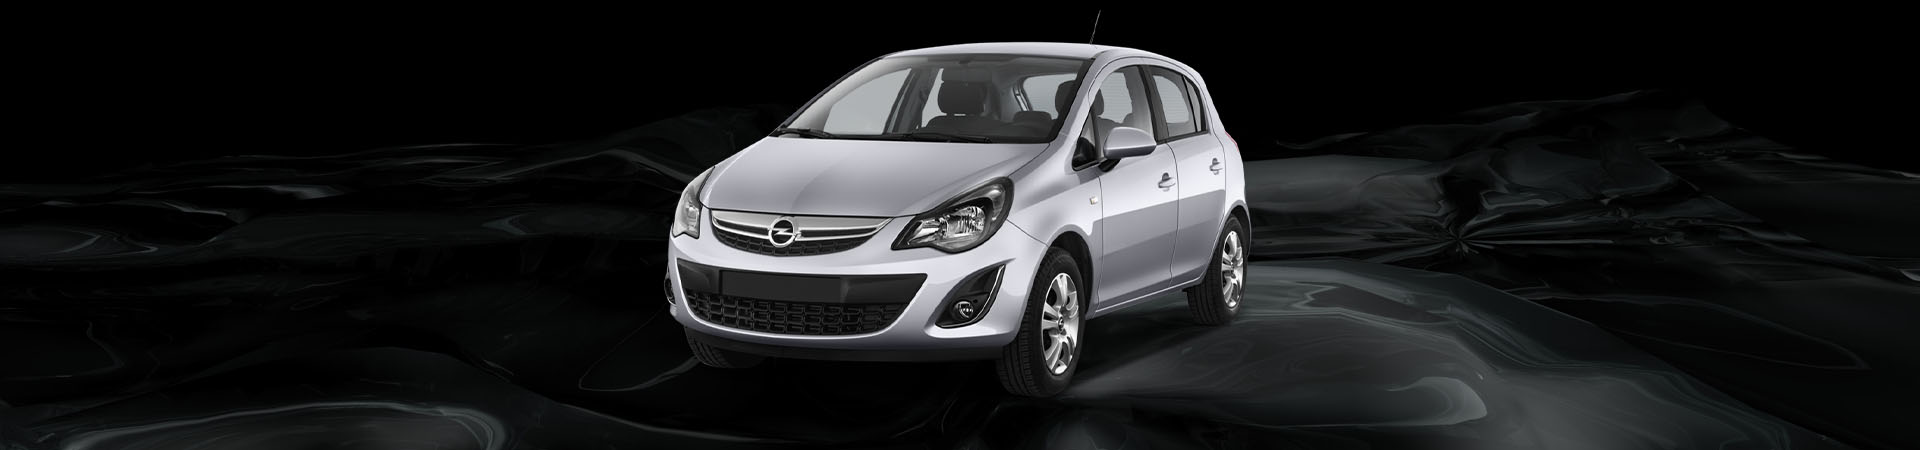  | Otkup Opel automobila